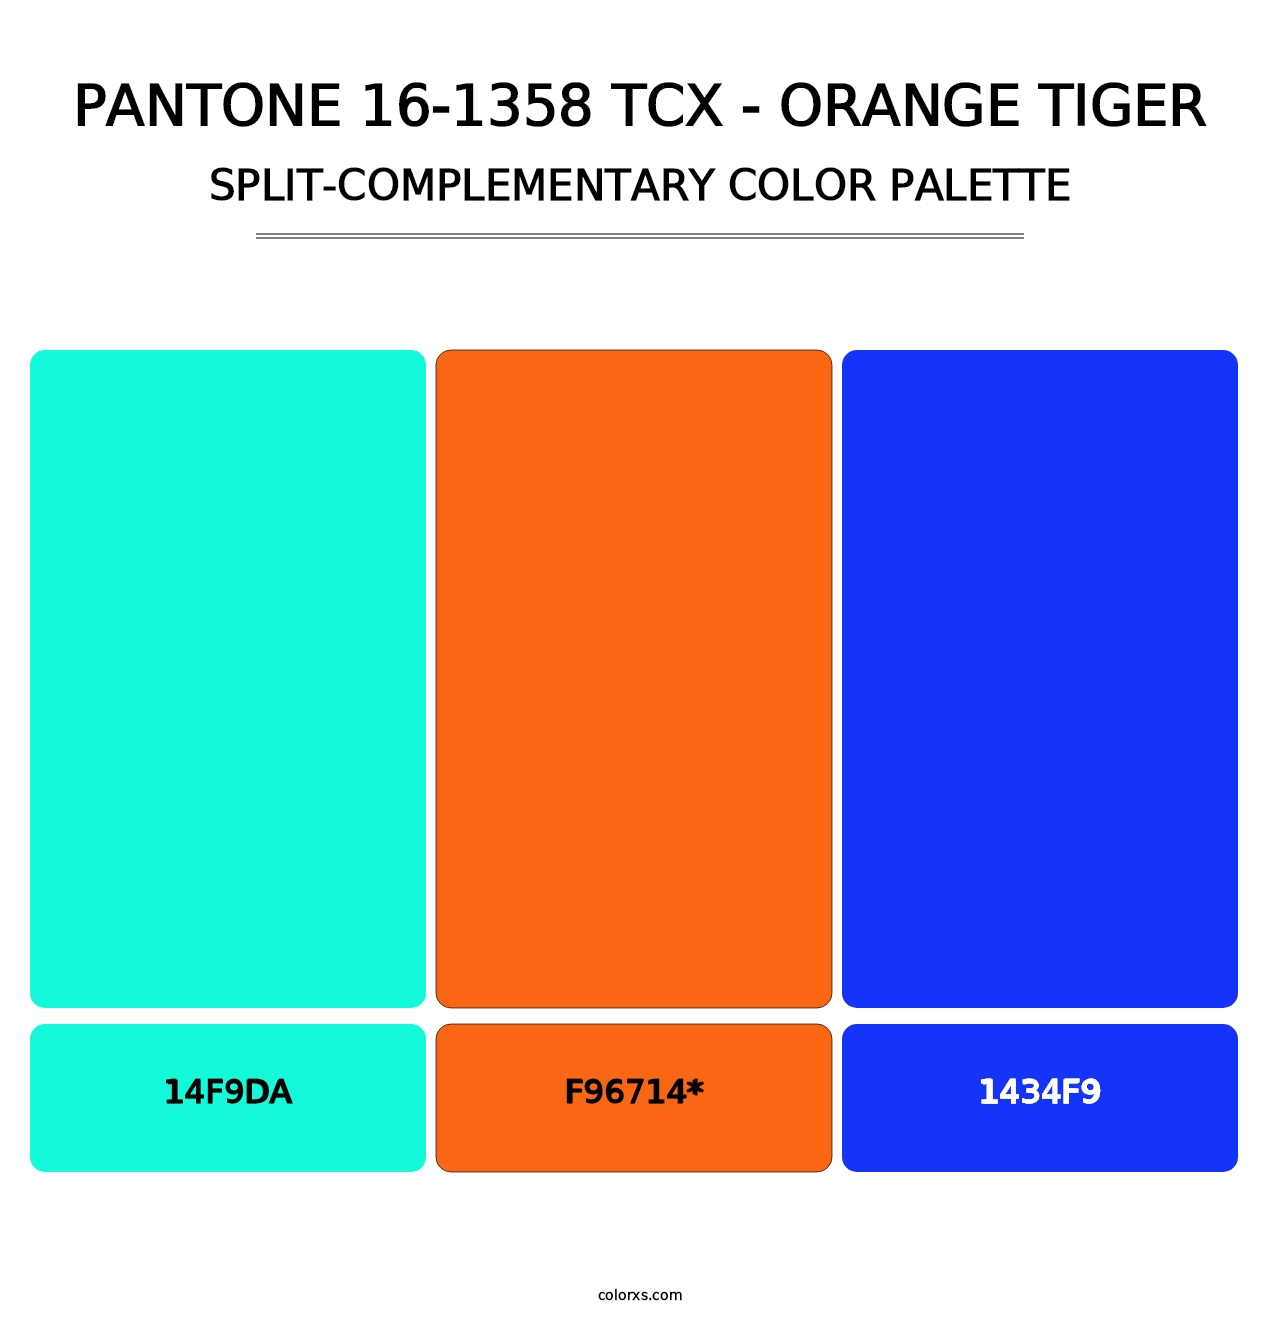 PANTONE 16-1358 TCX - Orange Tiger - Split-Complementary Color Palette